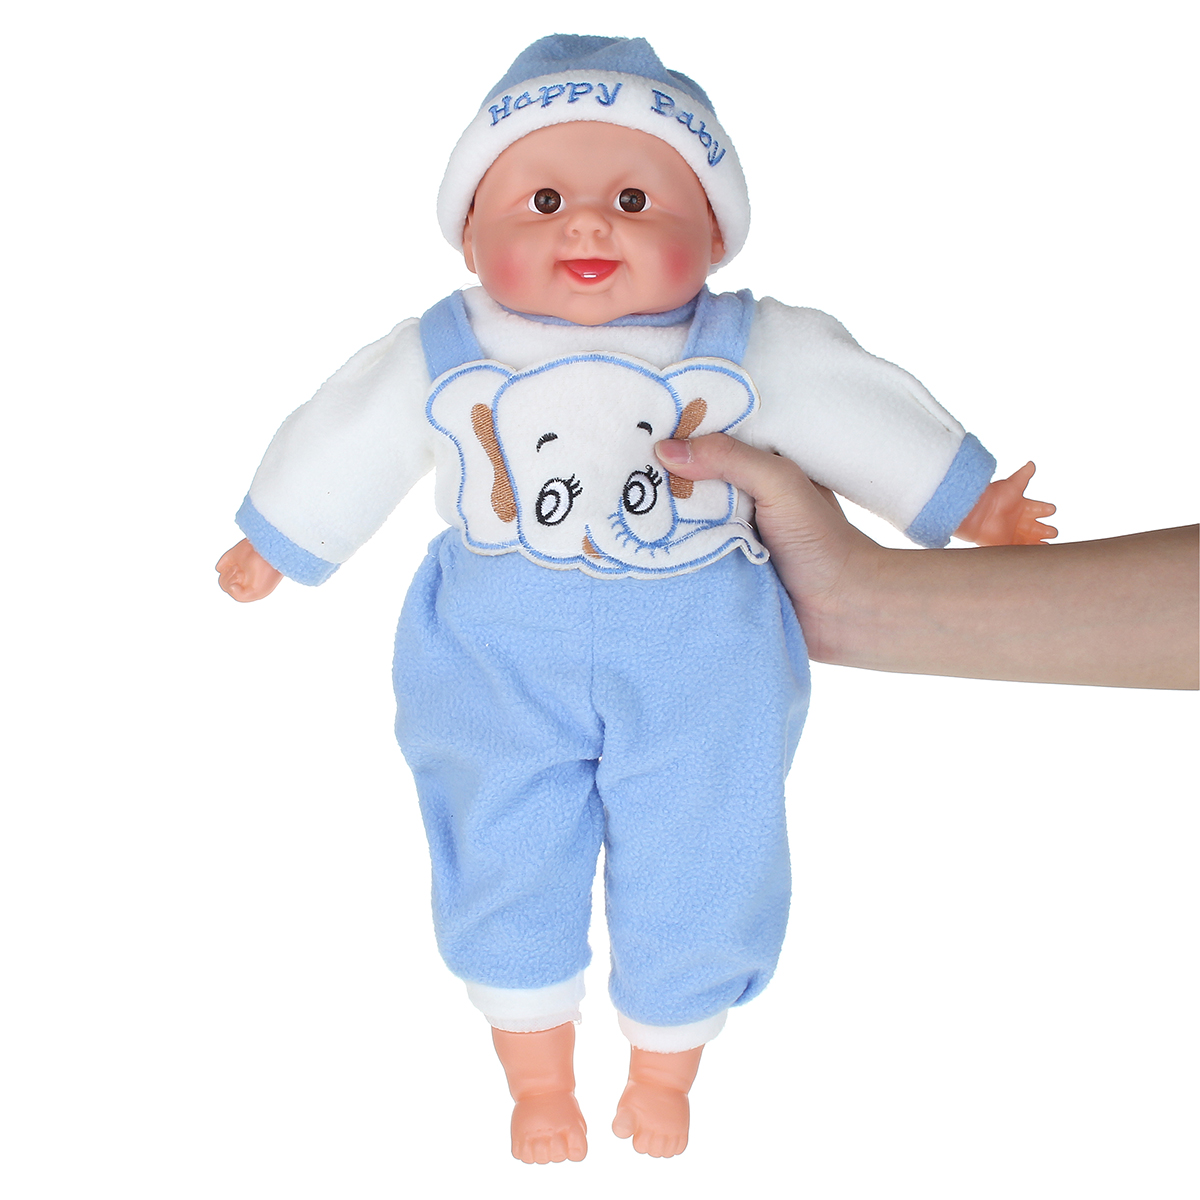 50CM-Multi-color-Simulation-Silicone-Vinyl-Lifelike-Realistic-Reborn-Newborn-Baby-Doll-Toy-with-Clot-1815387-12